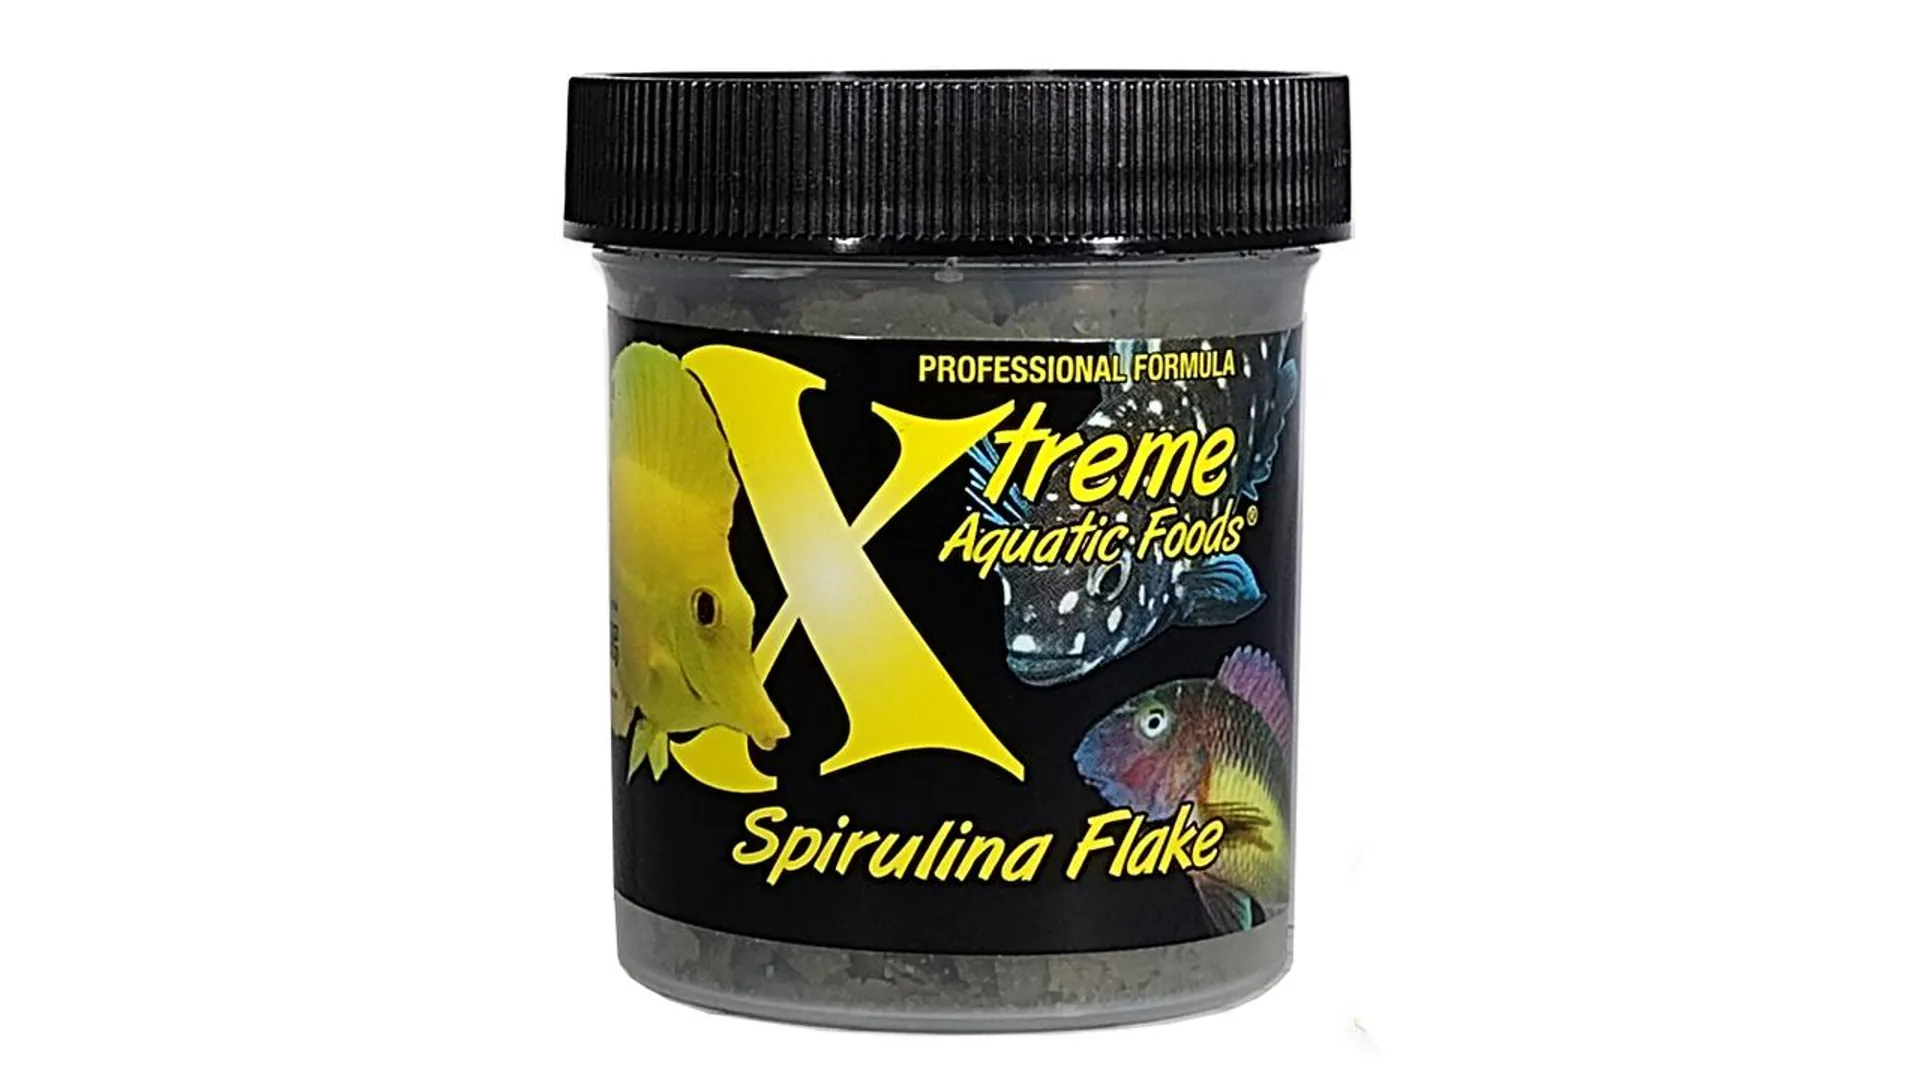 Xtreme Spirulina Flake